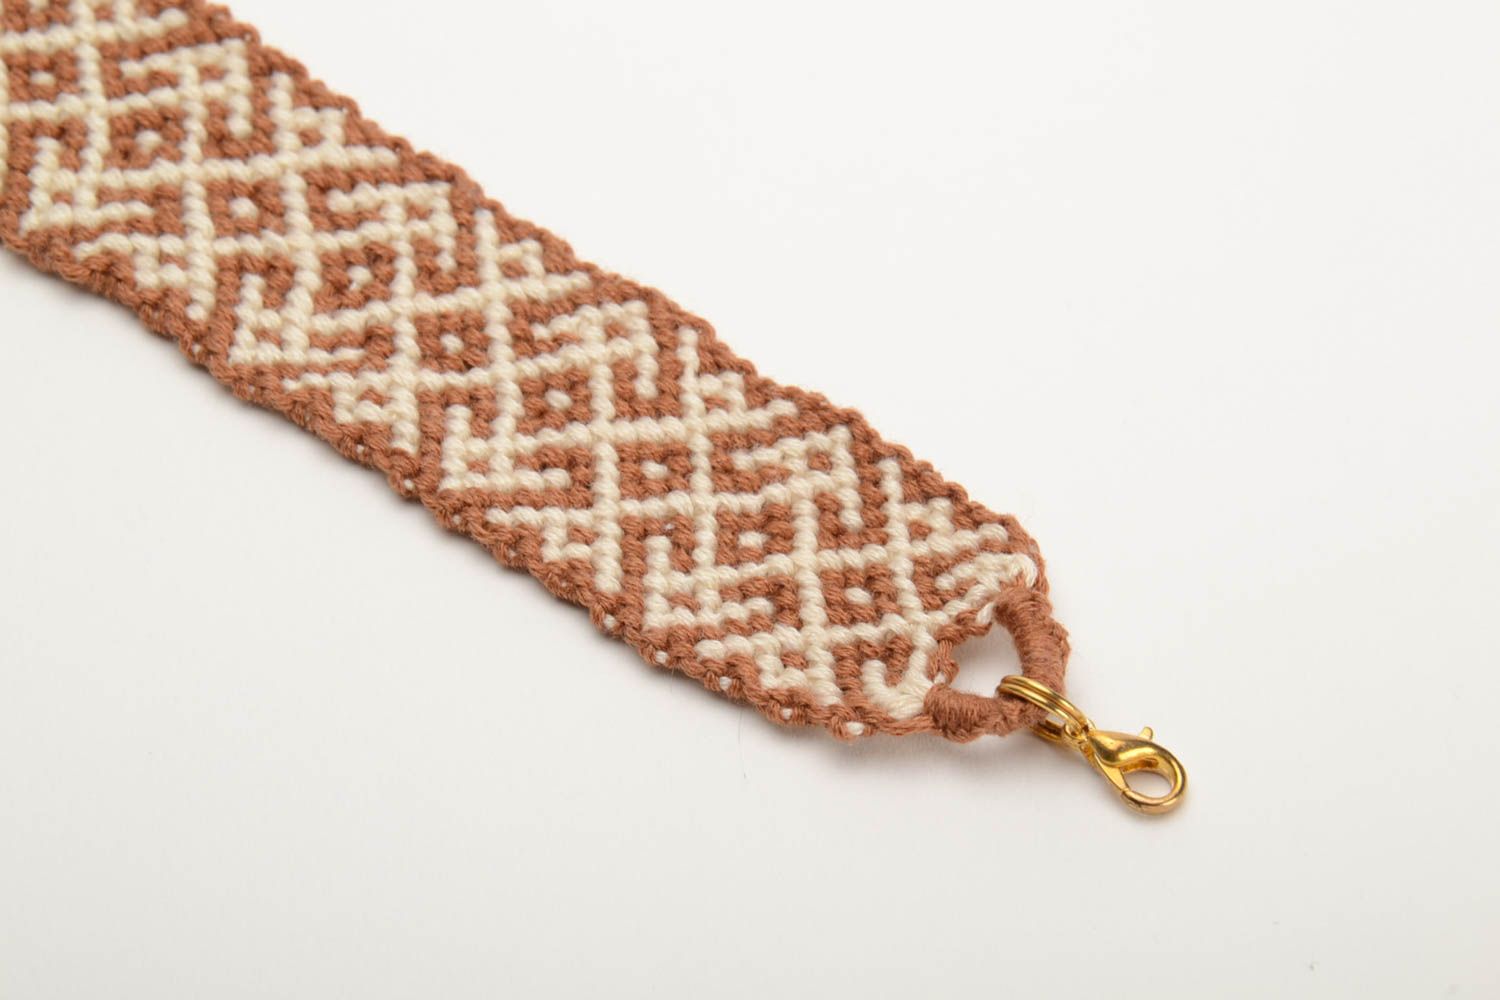 Handmade braided friendship bracelet made of floss thread white and brown photo 2